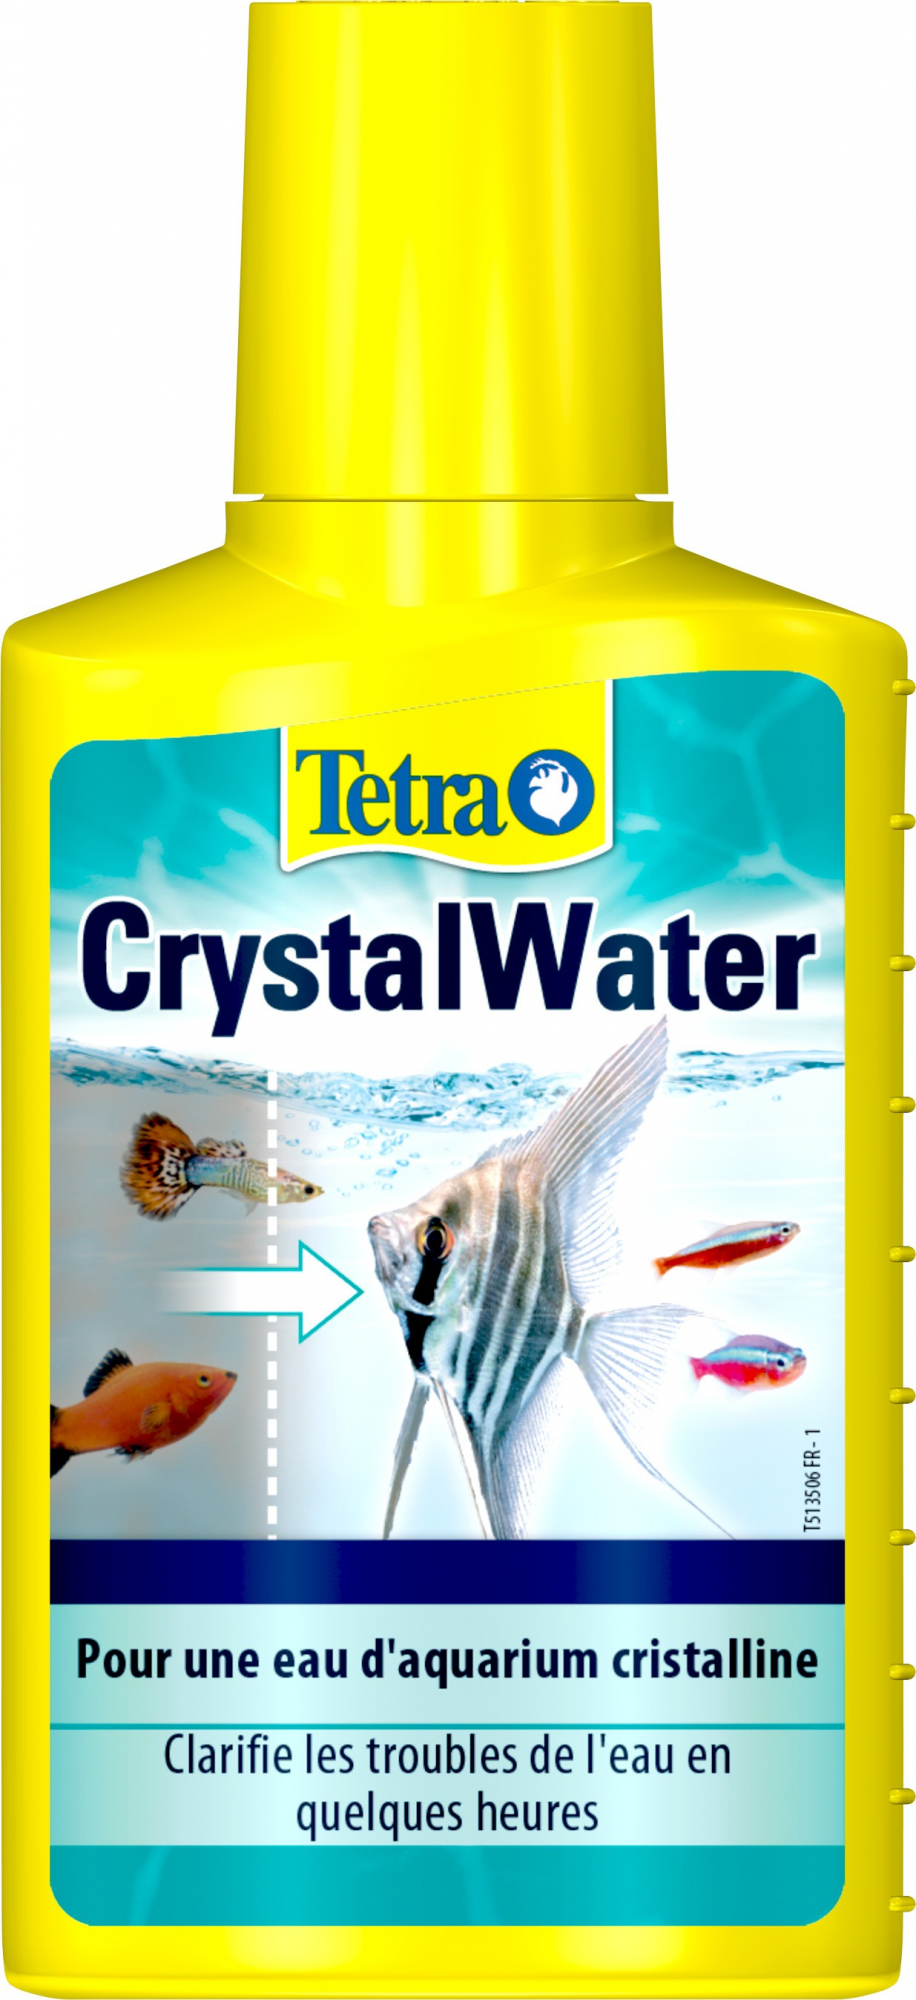 Tetra Crystal Water per rendere l'acqua cristallina